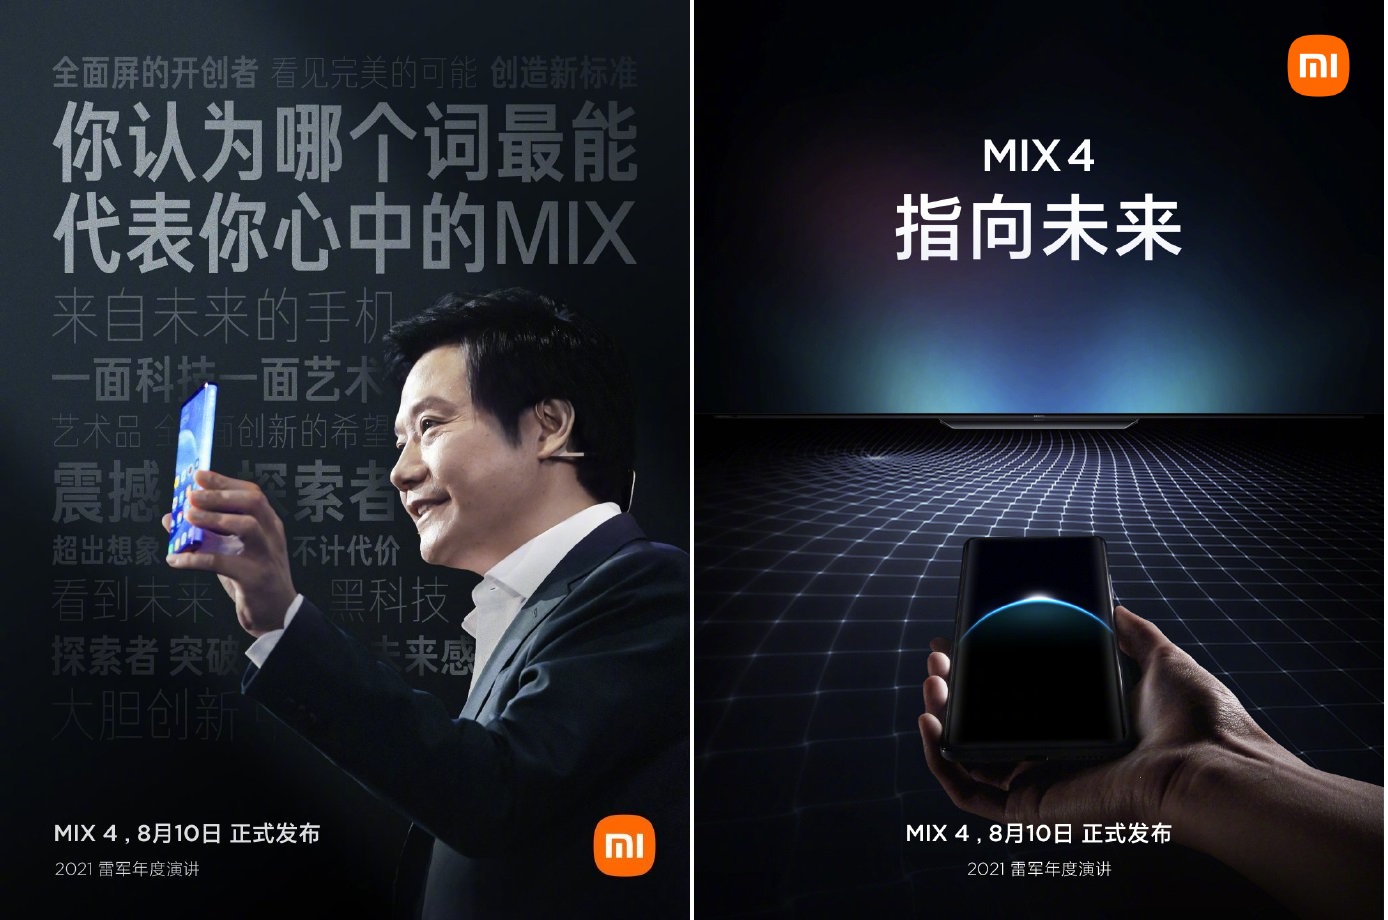 Xiaomi Mi Mix 4 flagship smartphone introduced